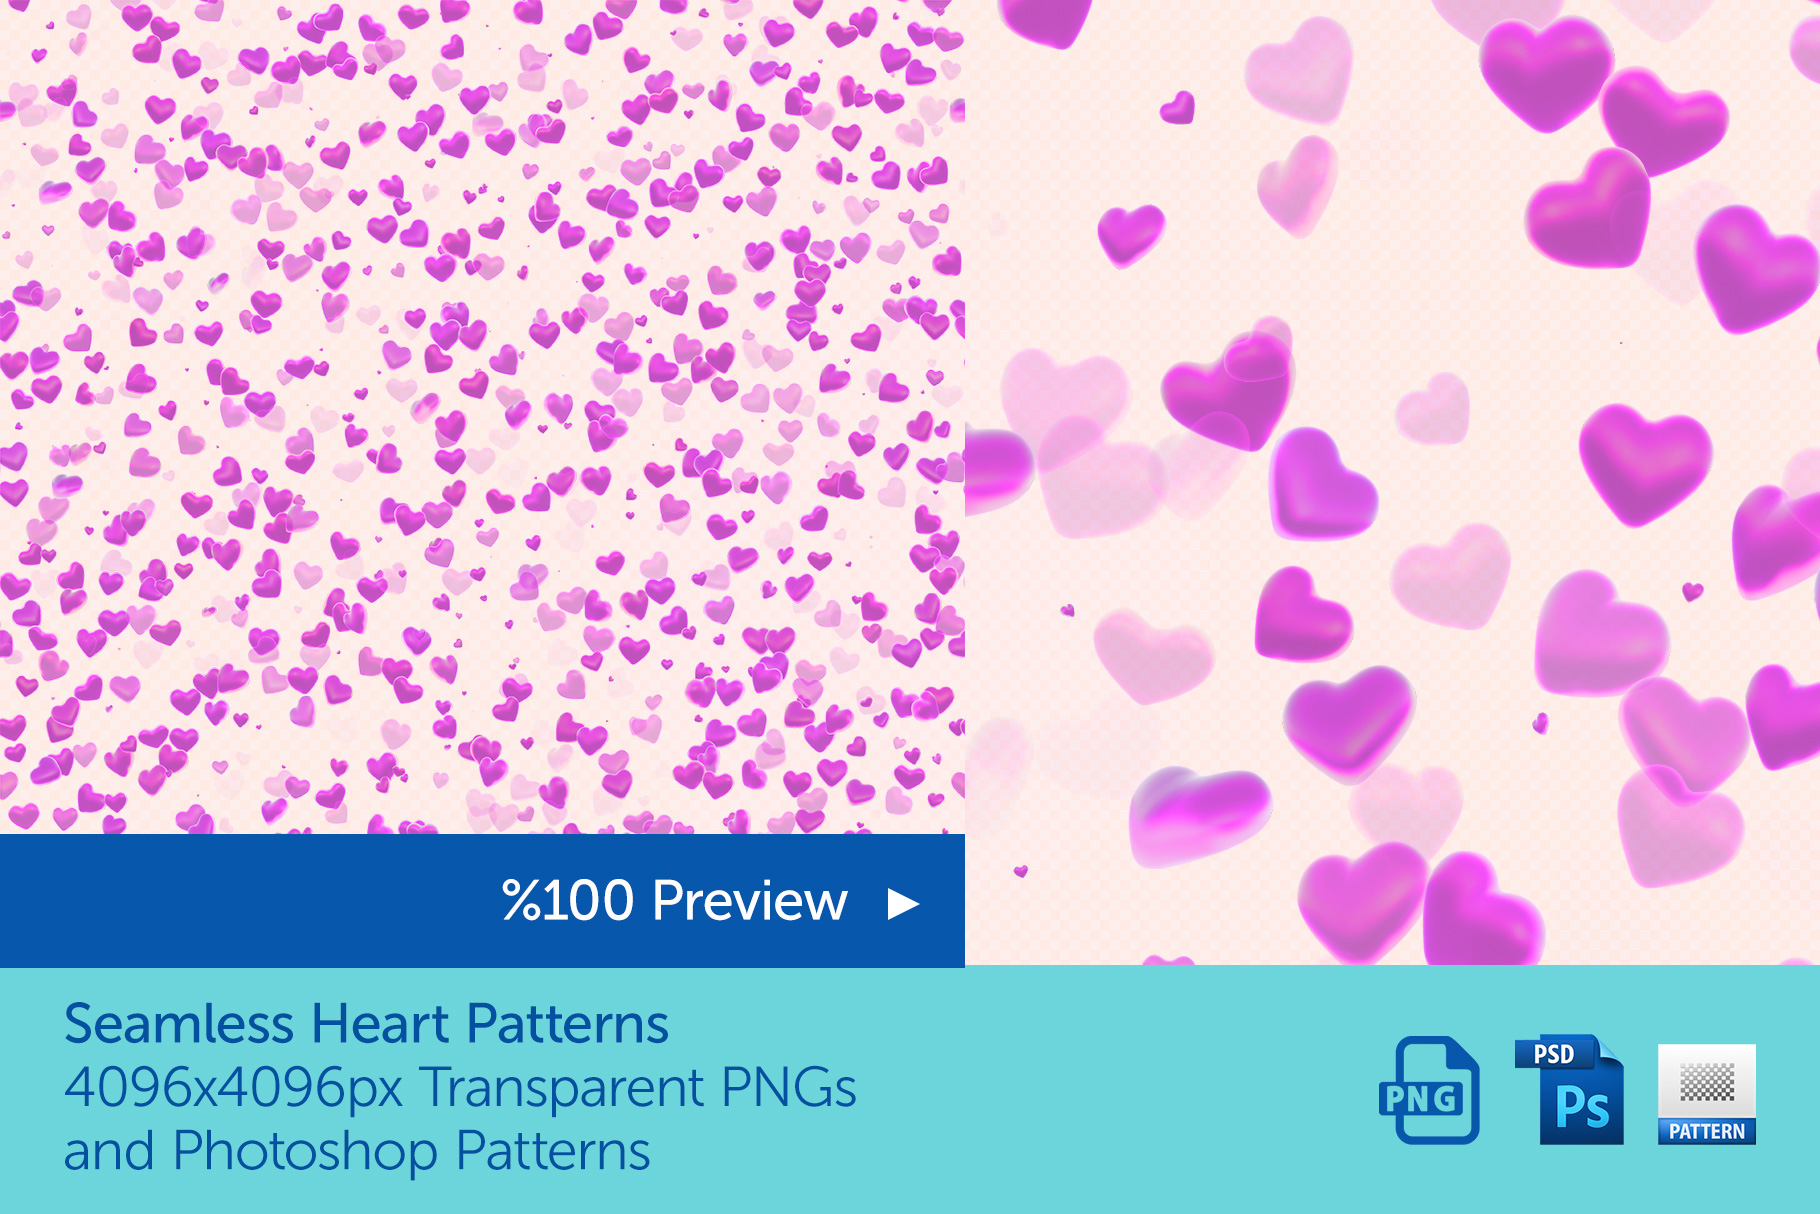 30 Seamless Heart Patterns